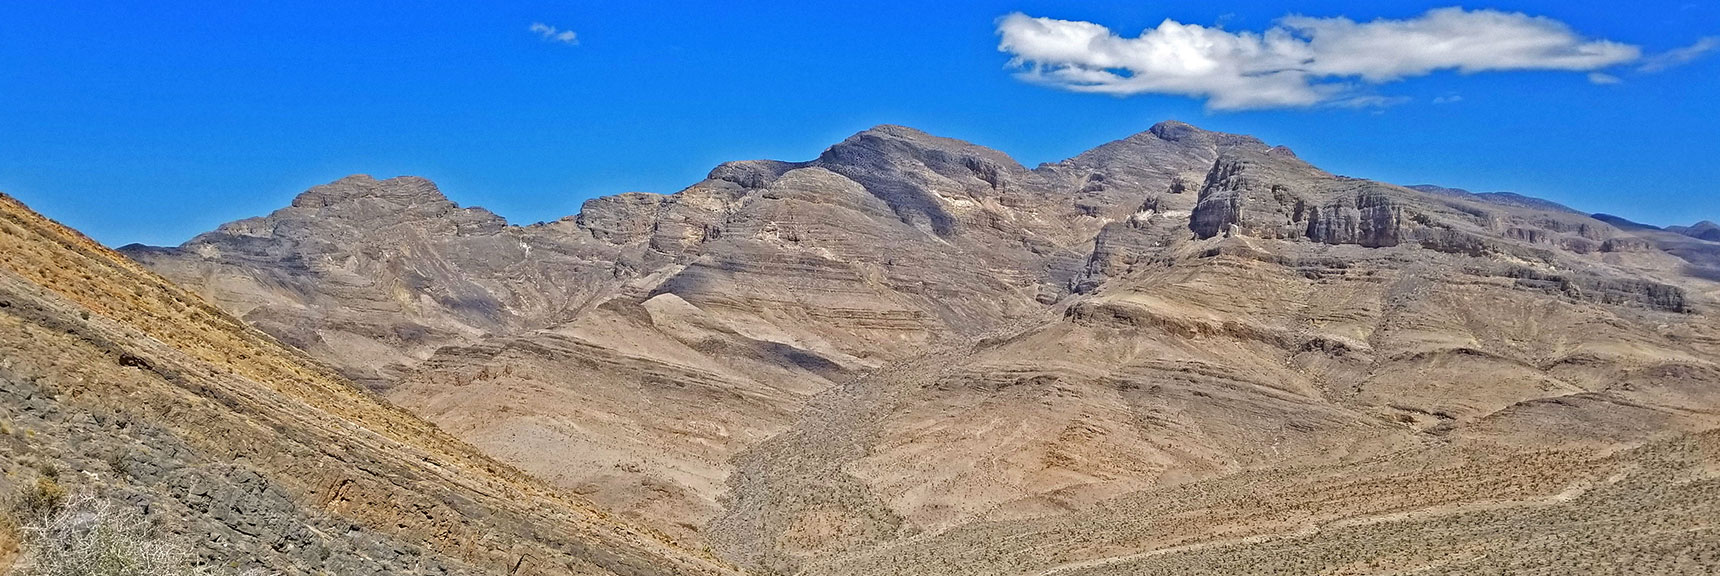 Half-way to Fossil Ridge Summit, View of Southern Sheep Range | Fossil Ridge End to End | Sheep Range | Desert National Wildlife Refuge, Nevada